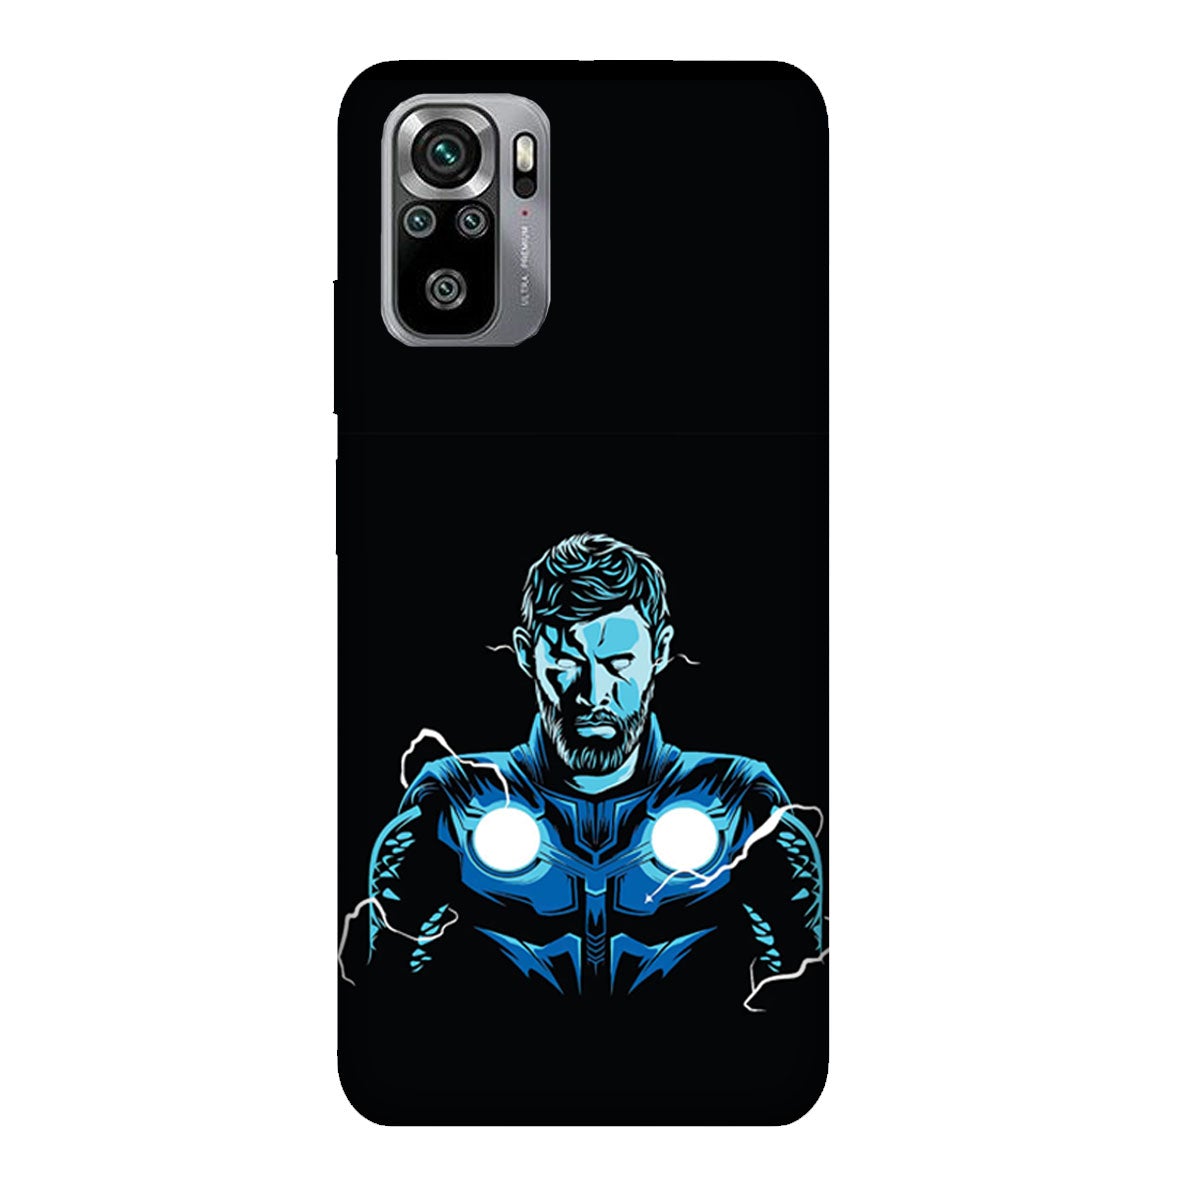 Thor - Avengers - Mobile Phone Cover - Hard Case